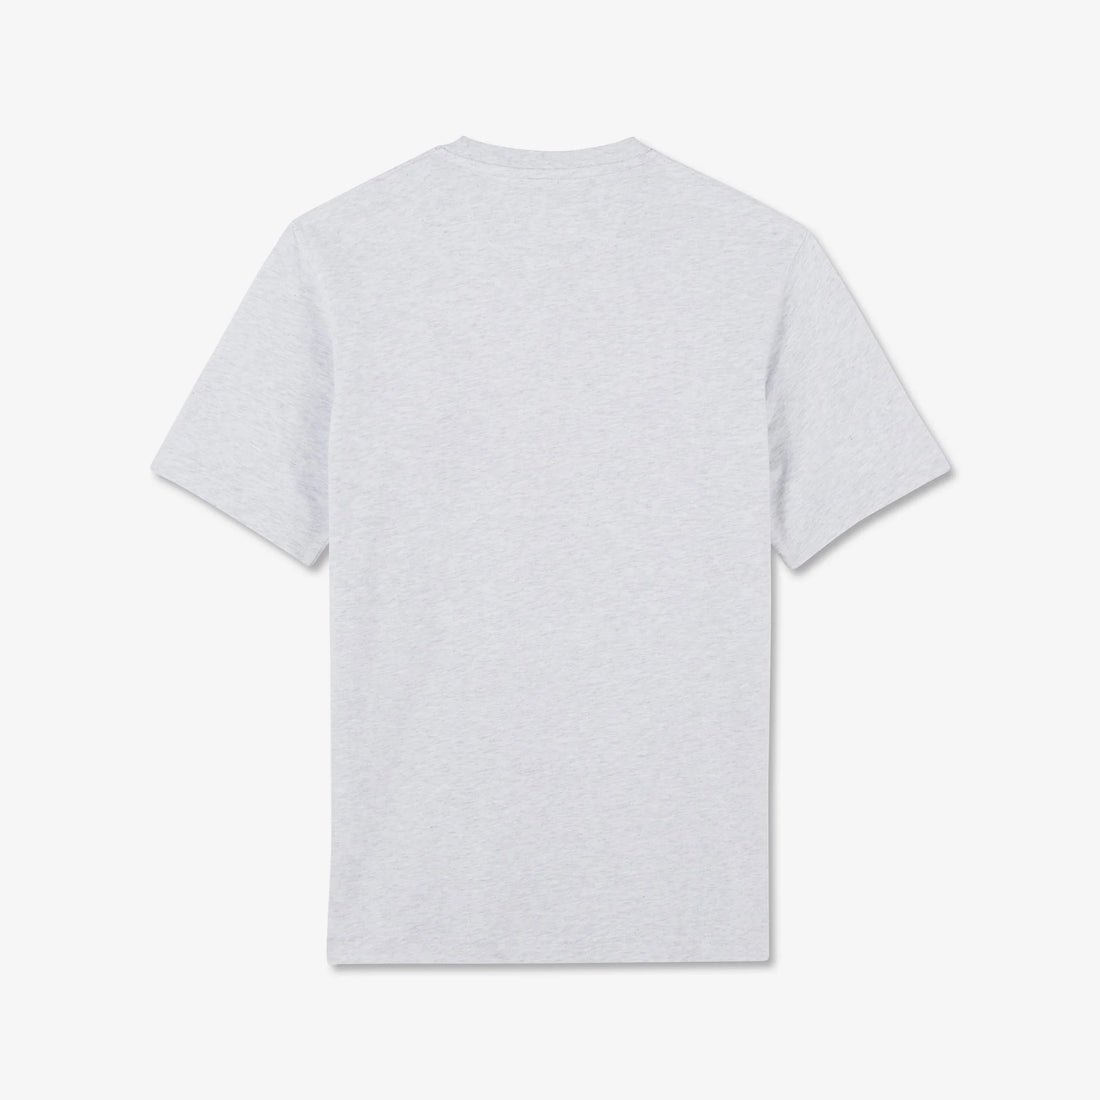 grey-t-shirt-with-bicolour-eden-park-screen-print_e23maitc0046_grc7_02